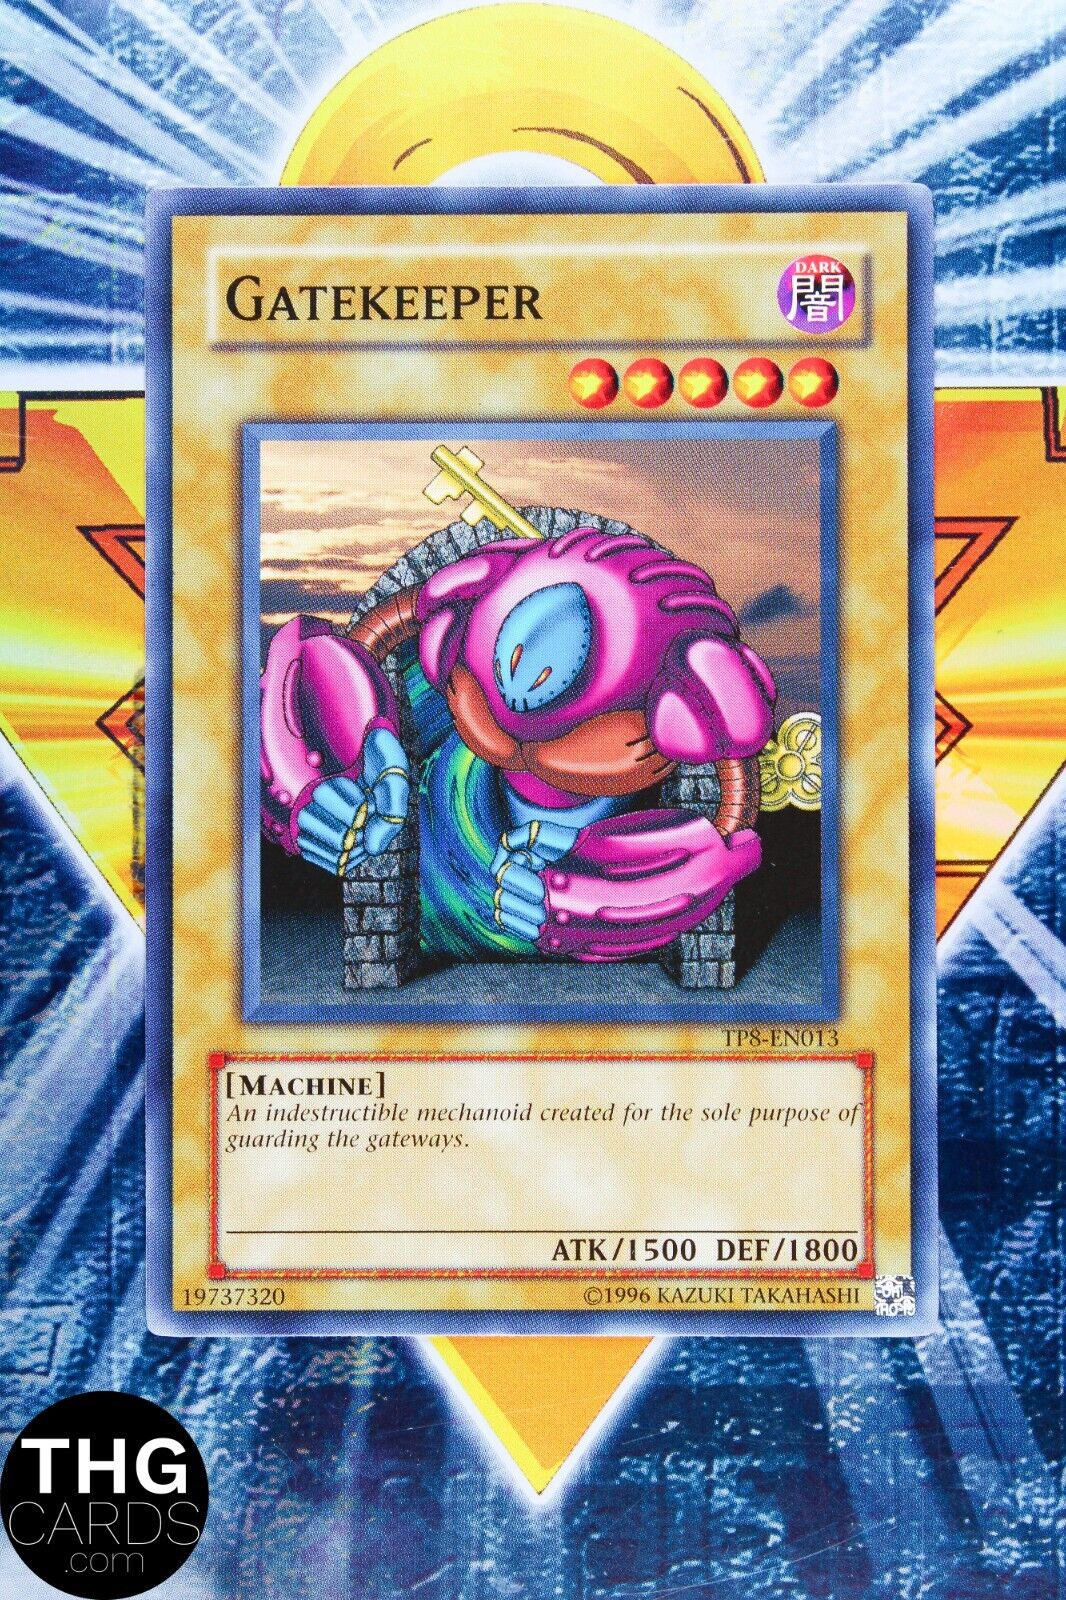 Gatekeeper TP8-EN013 Common Yugioh Card